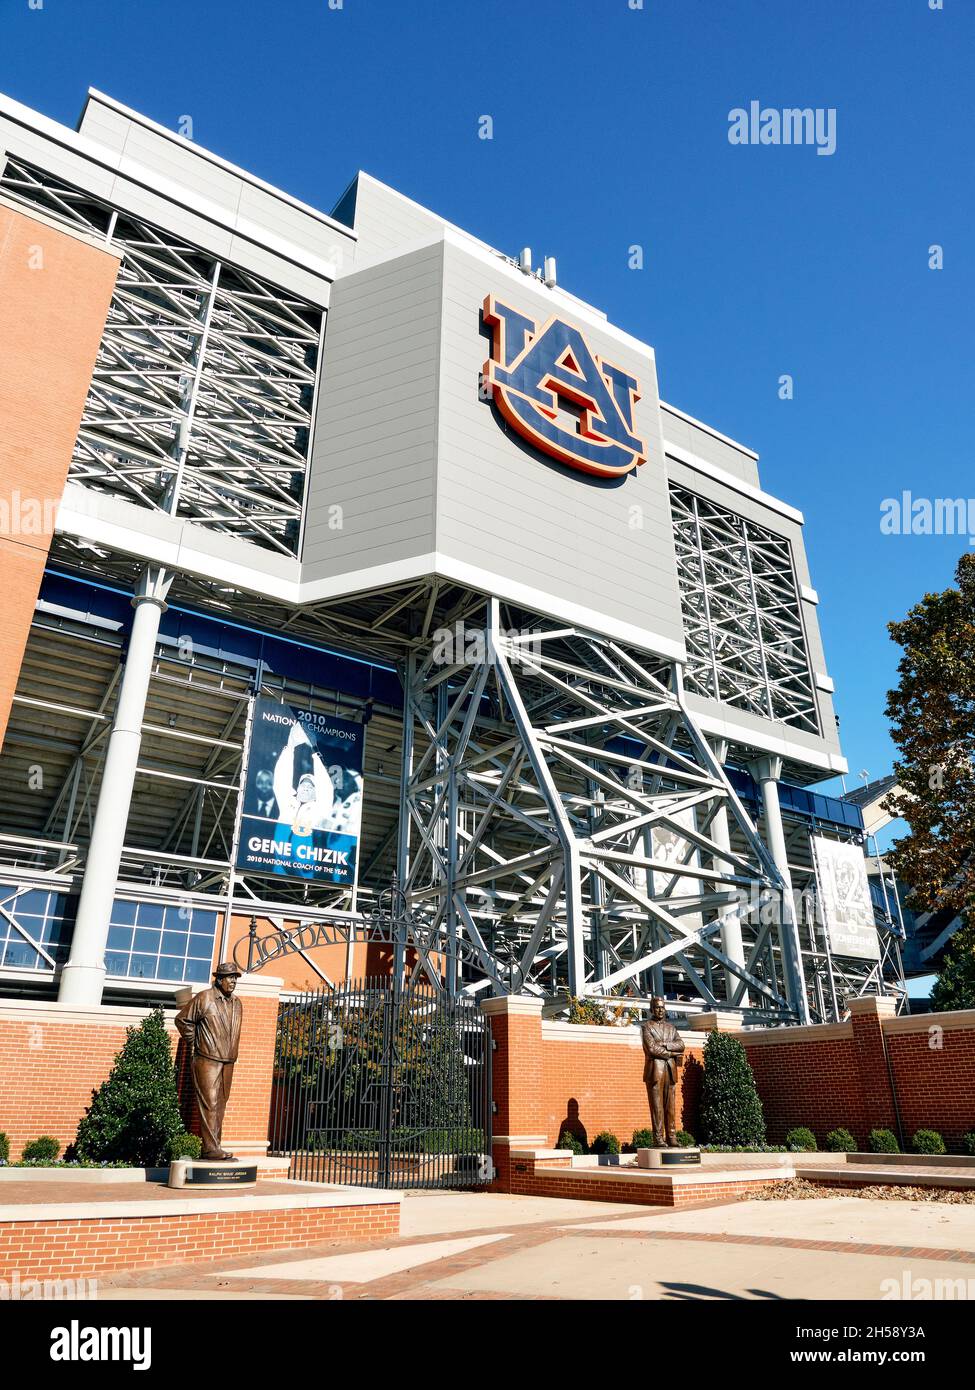 Auburn University Jordan-Hare football stadium exterior entrance with the Auburn Tigers logo in Auburn Alabama, USA. Stock Photo